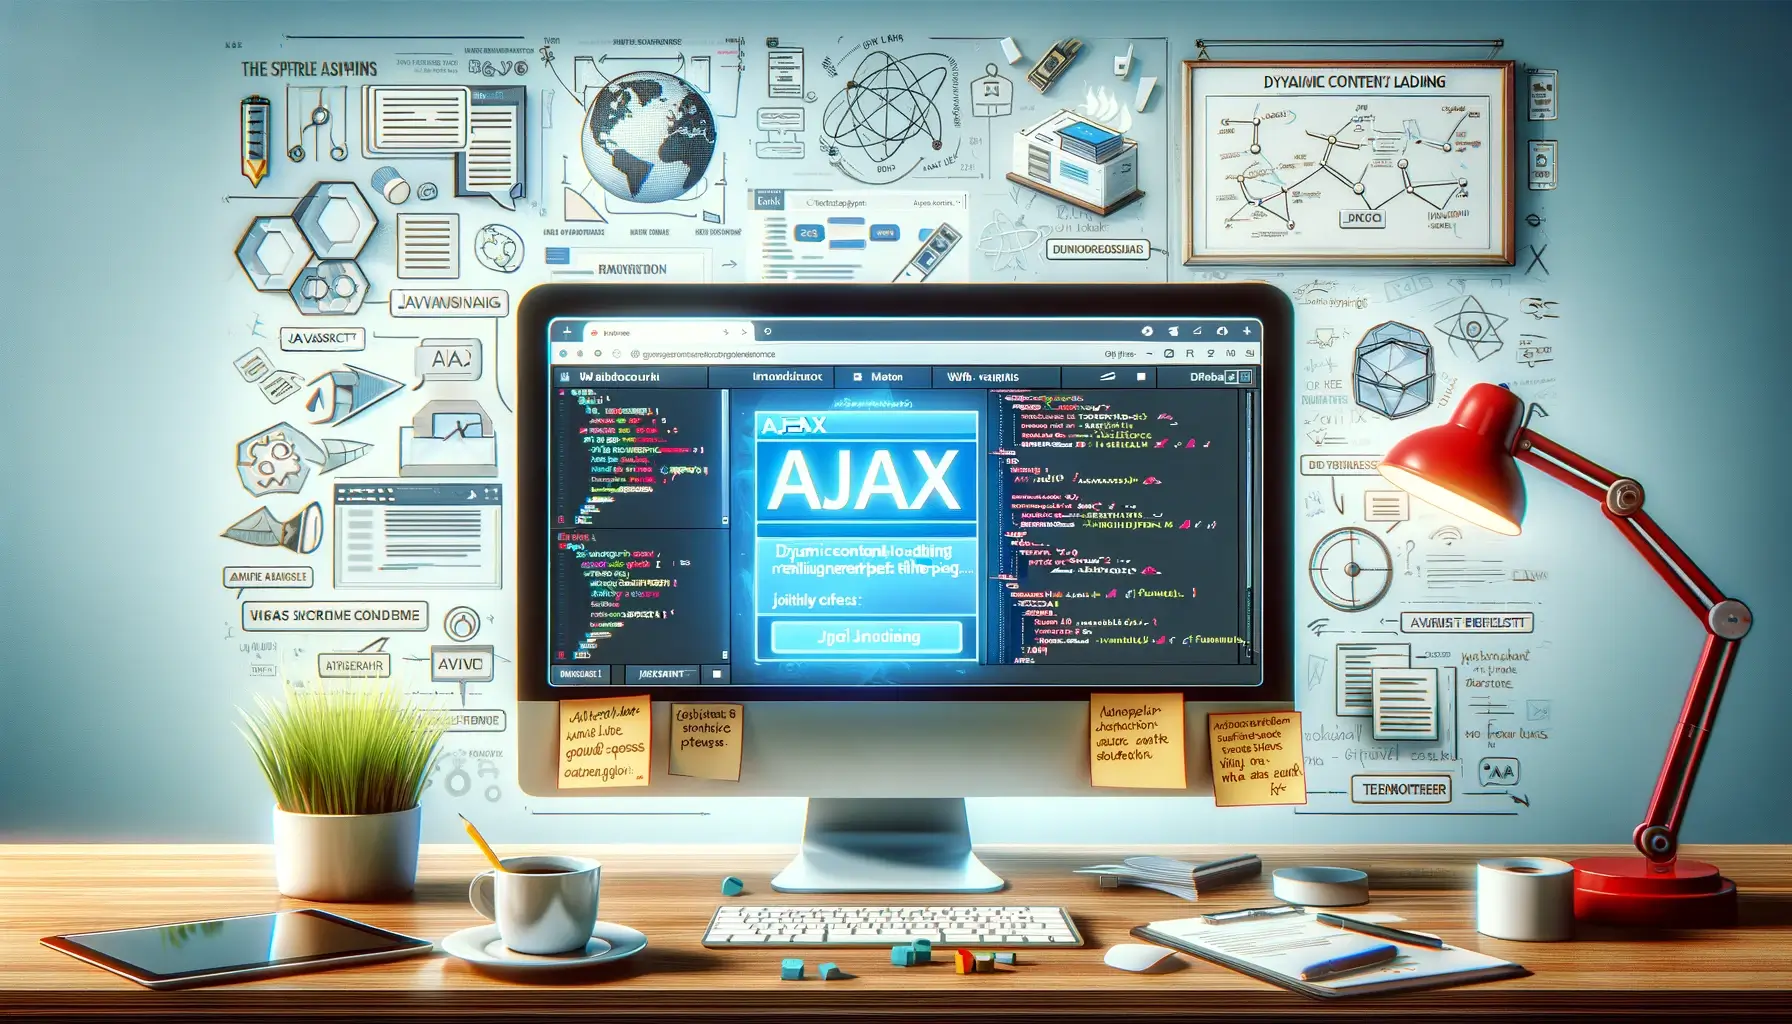 Utilisation d'Ajax